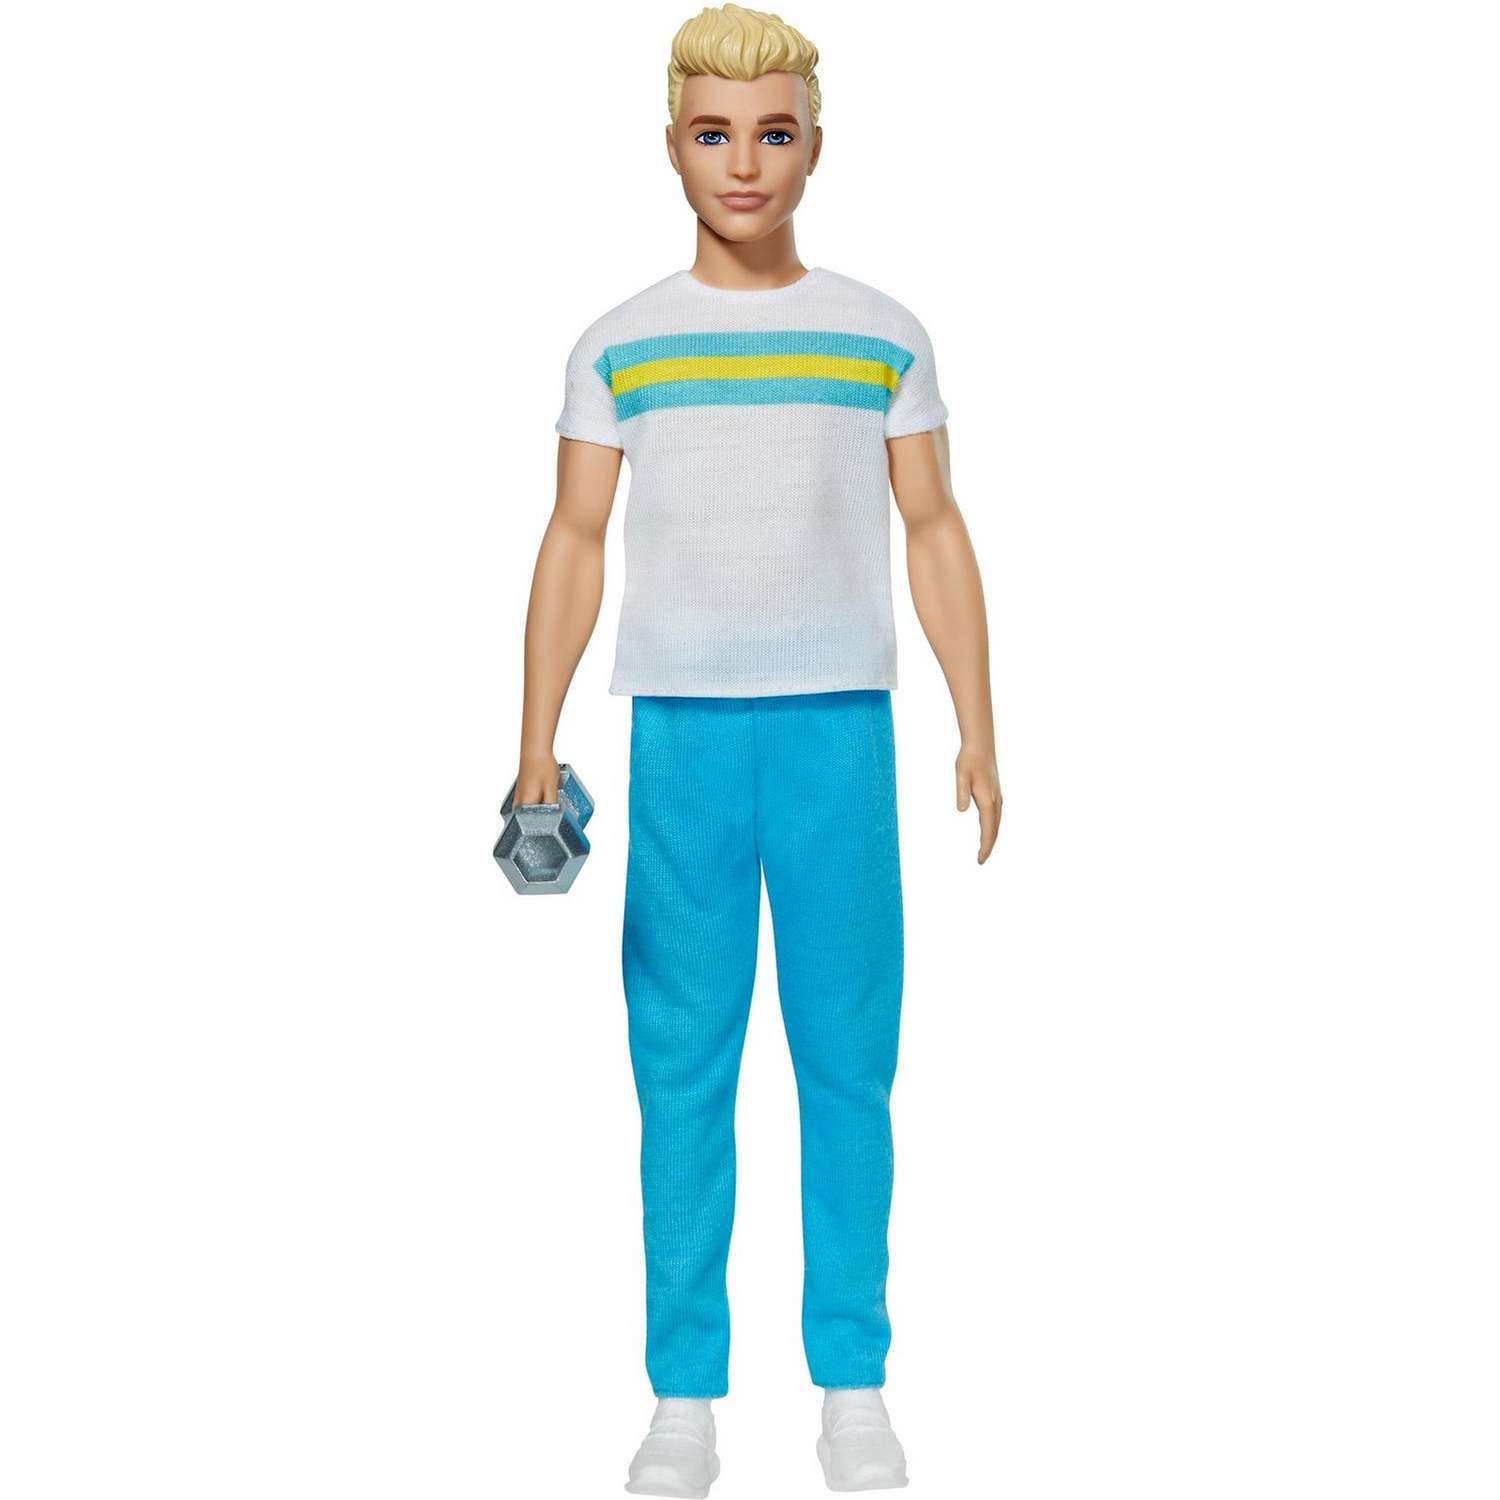 Кукла Barbie Кен в джинсах и футболке GRB43 GRB43 - фото 1